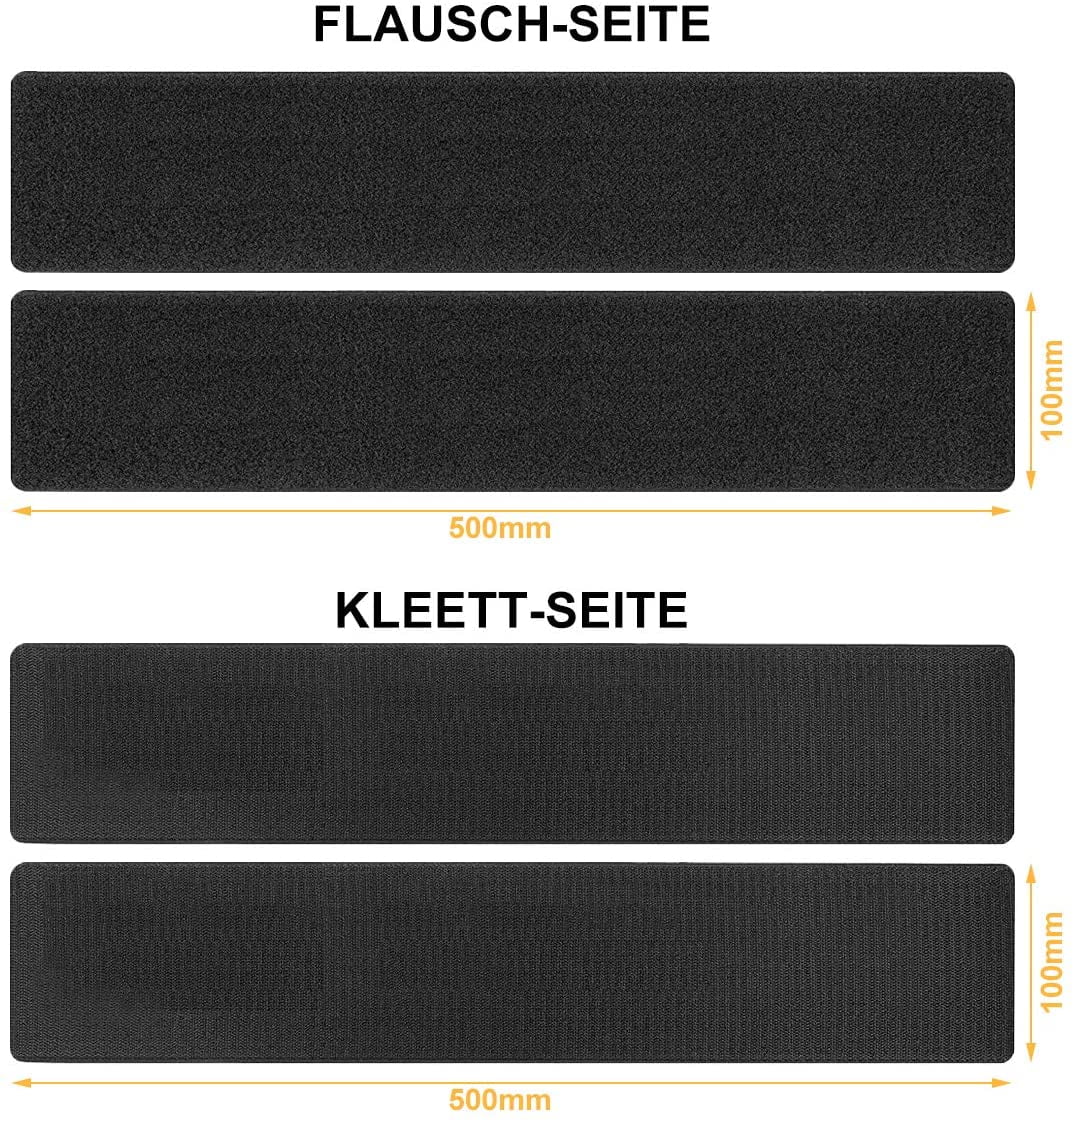 Velcro license plate holder  Swiss design & lifetime guarantee